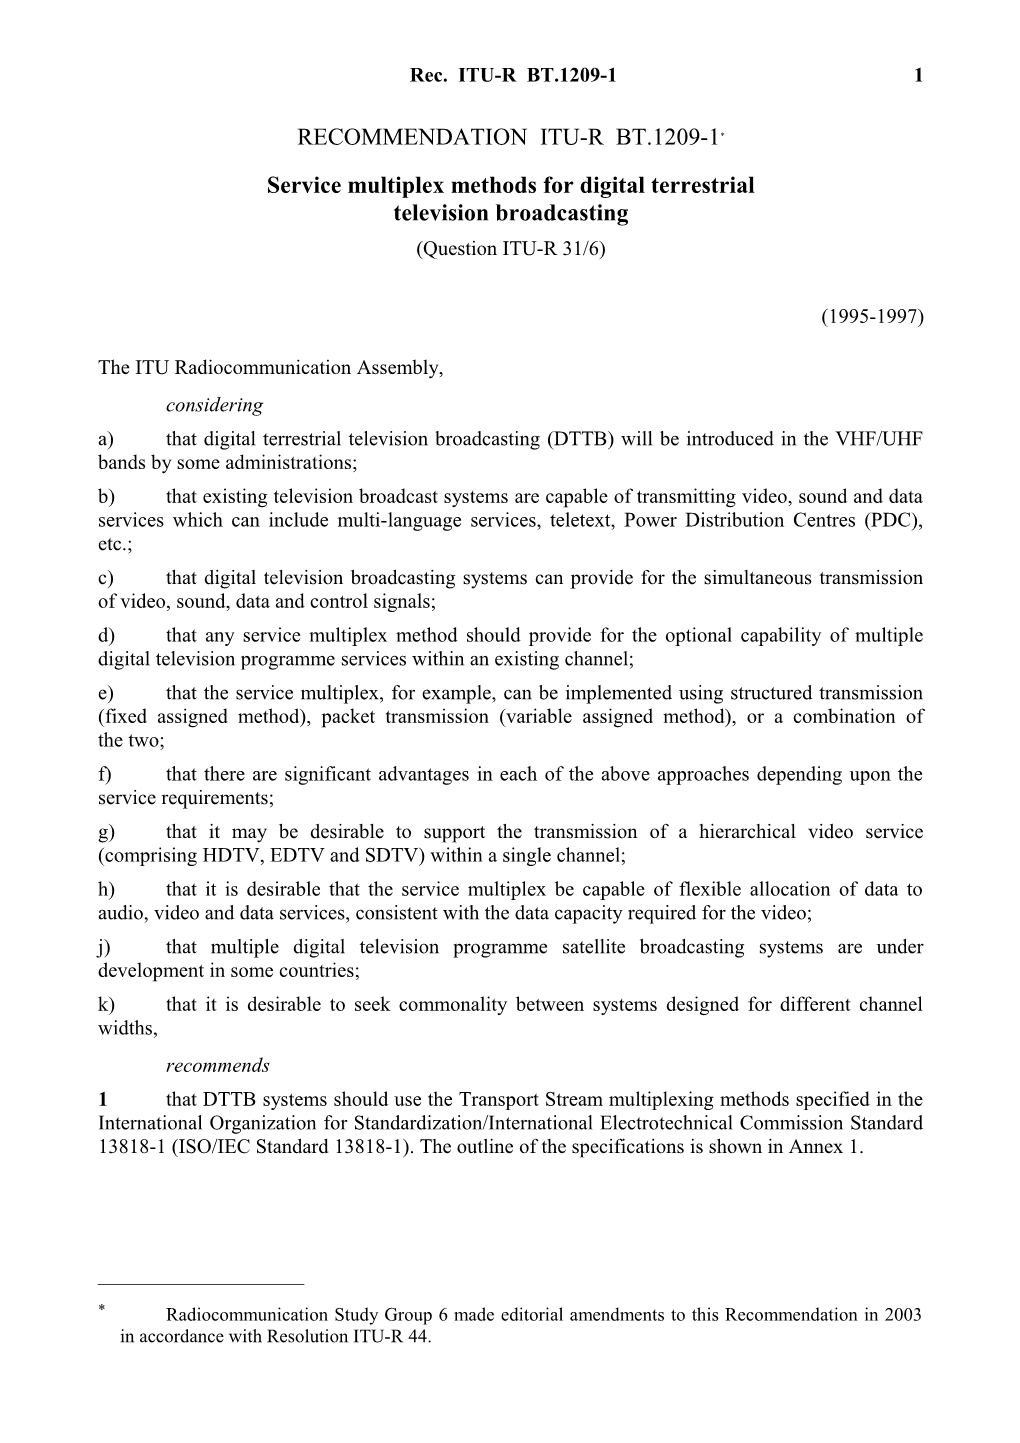 RECOMMENDATION ITU-R BT.1209-1 - Service Multiplex Methods for Digital Terrestrial Television